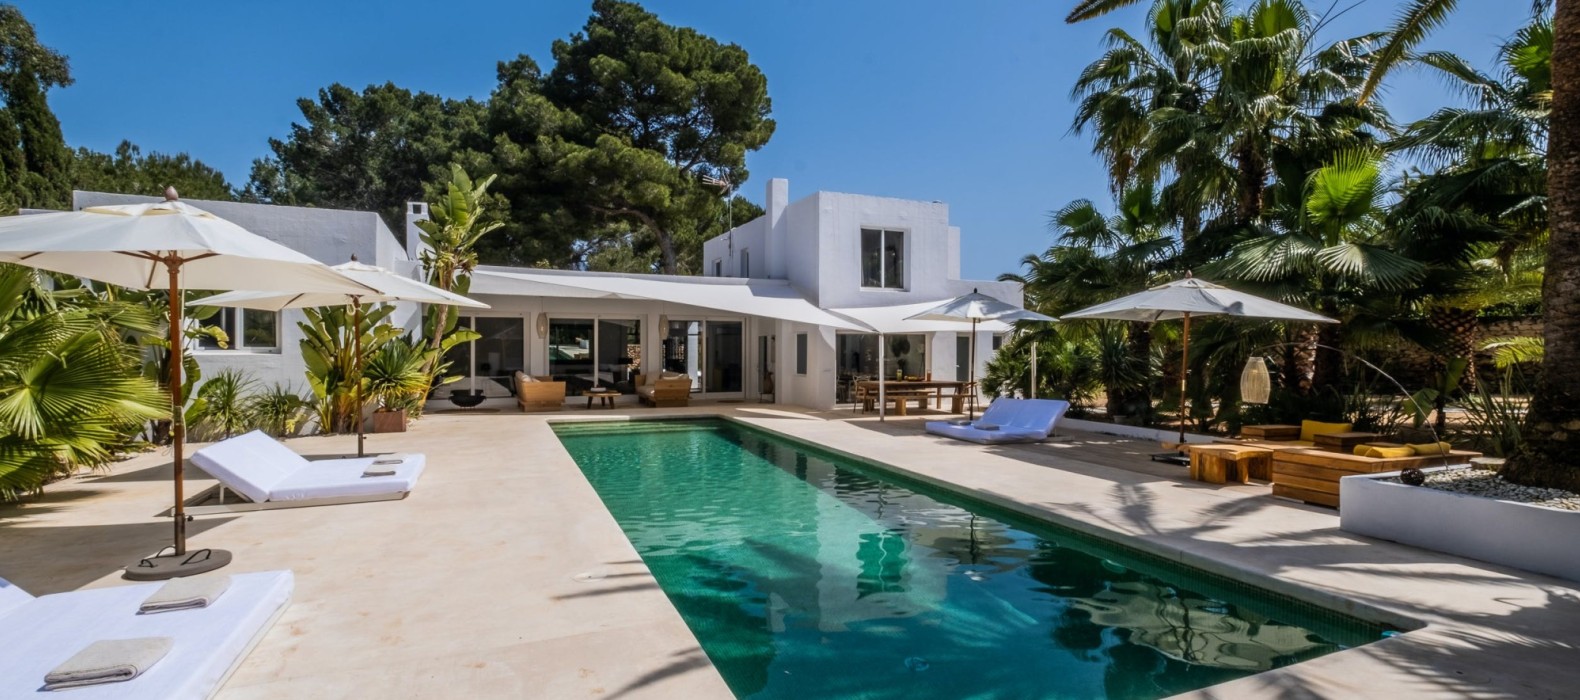 Exterior villa view of Villa Savant in Ibiza